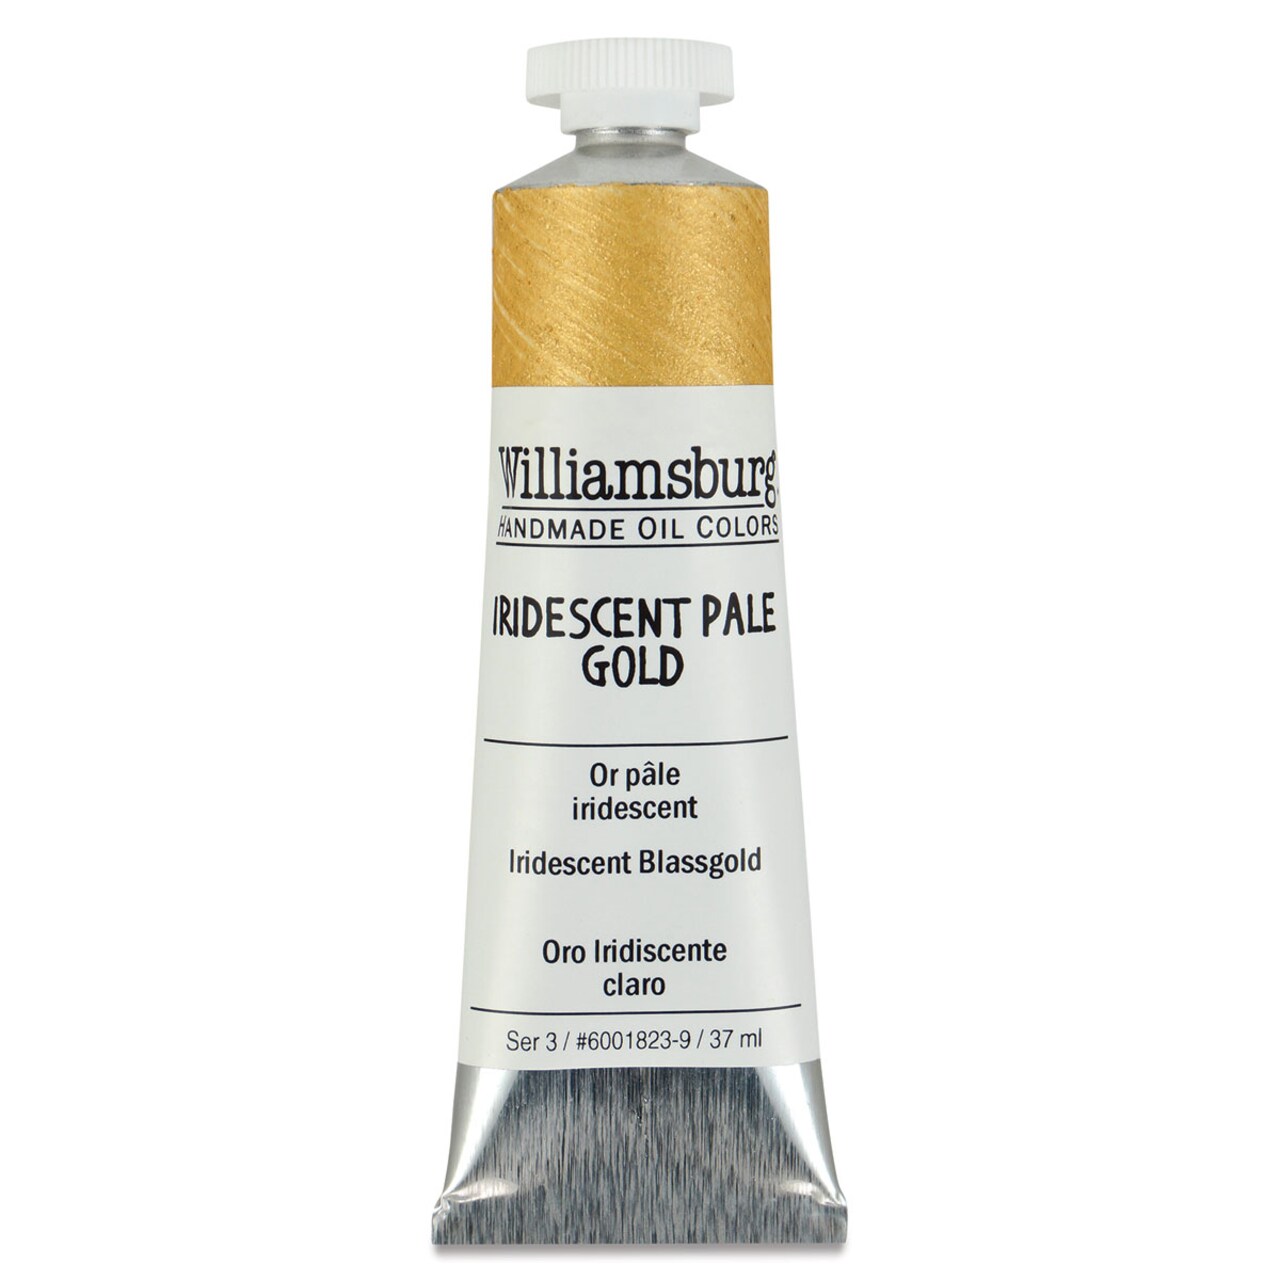 Williamsburg Handmade Oil Paint - Iridescent Pale Gold, 37 ml tube